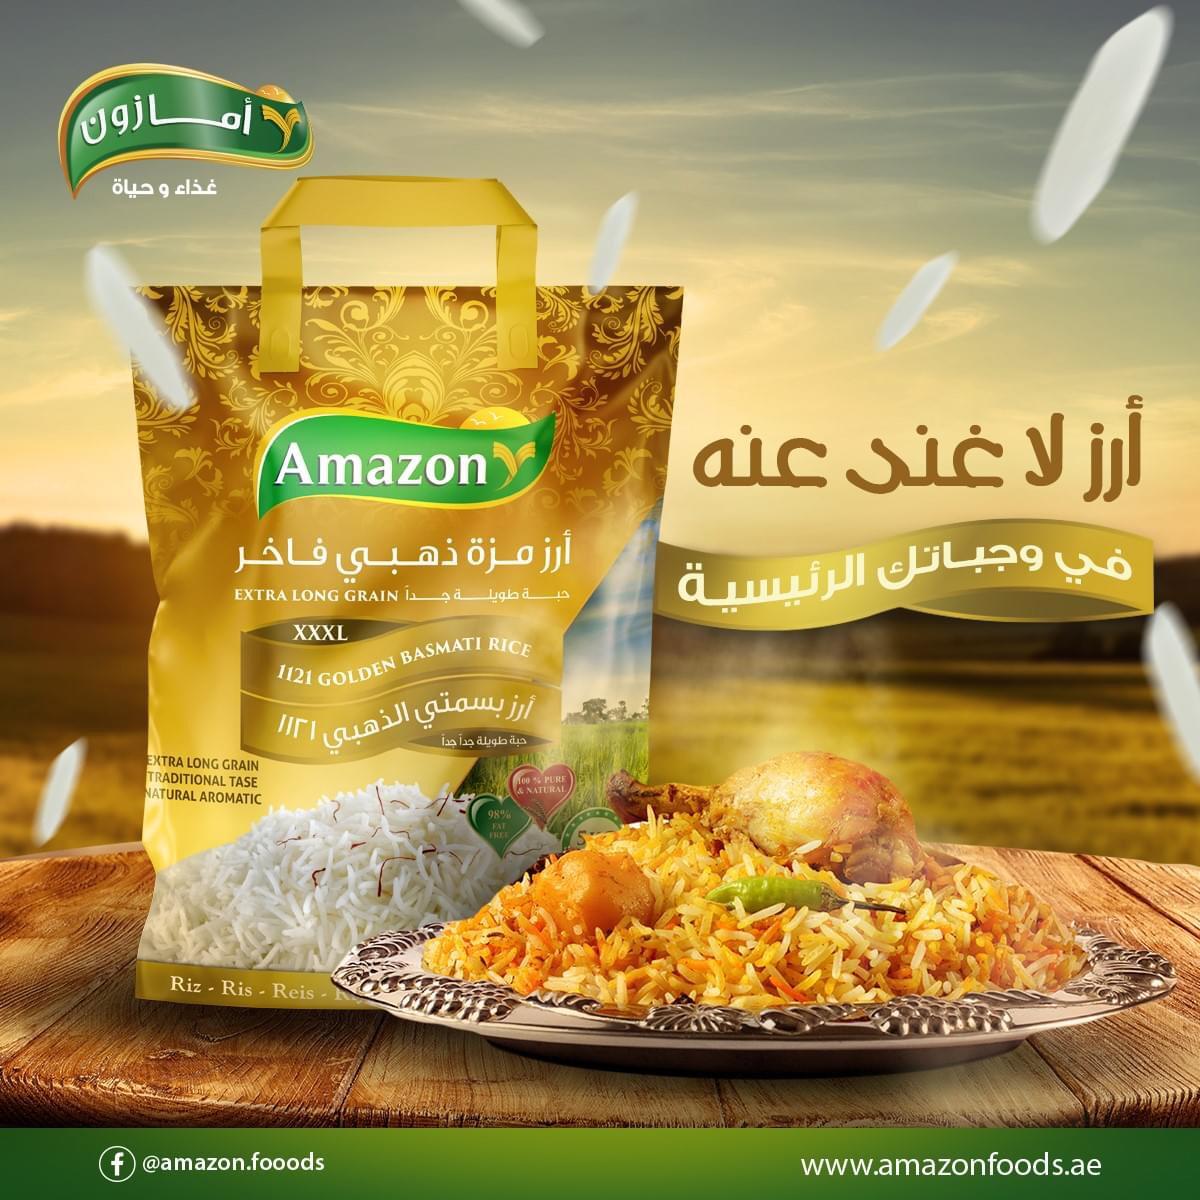 Amazon Golden basmati rice